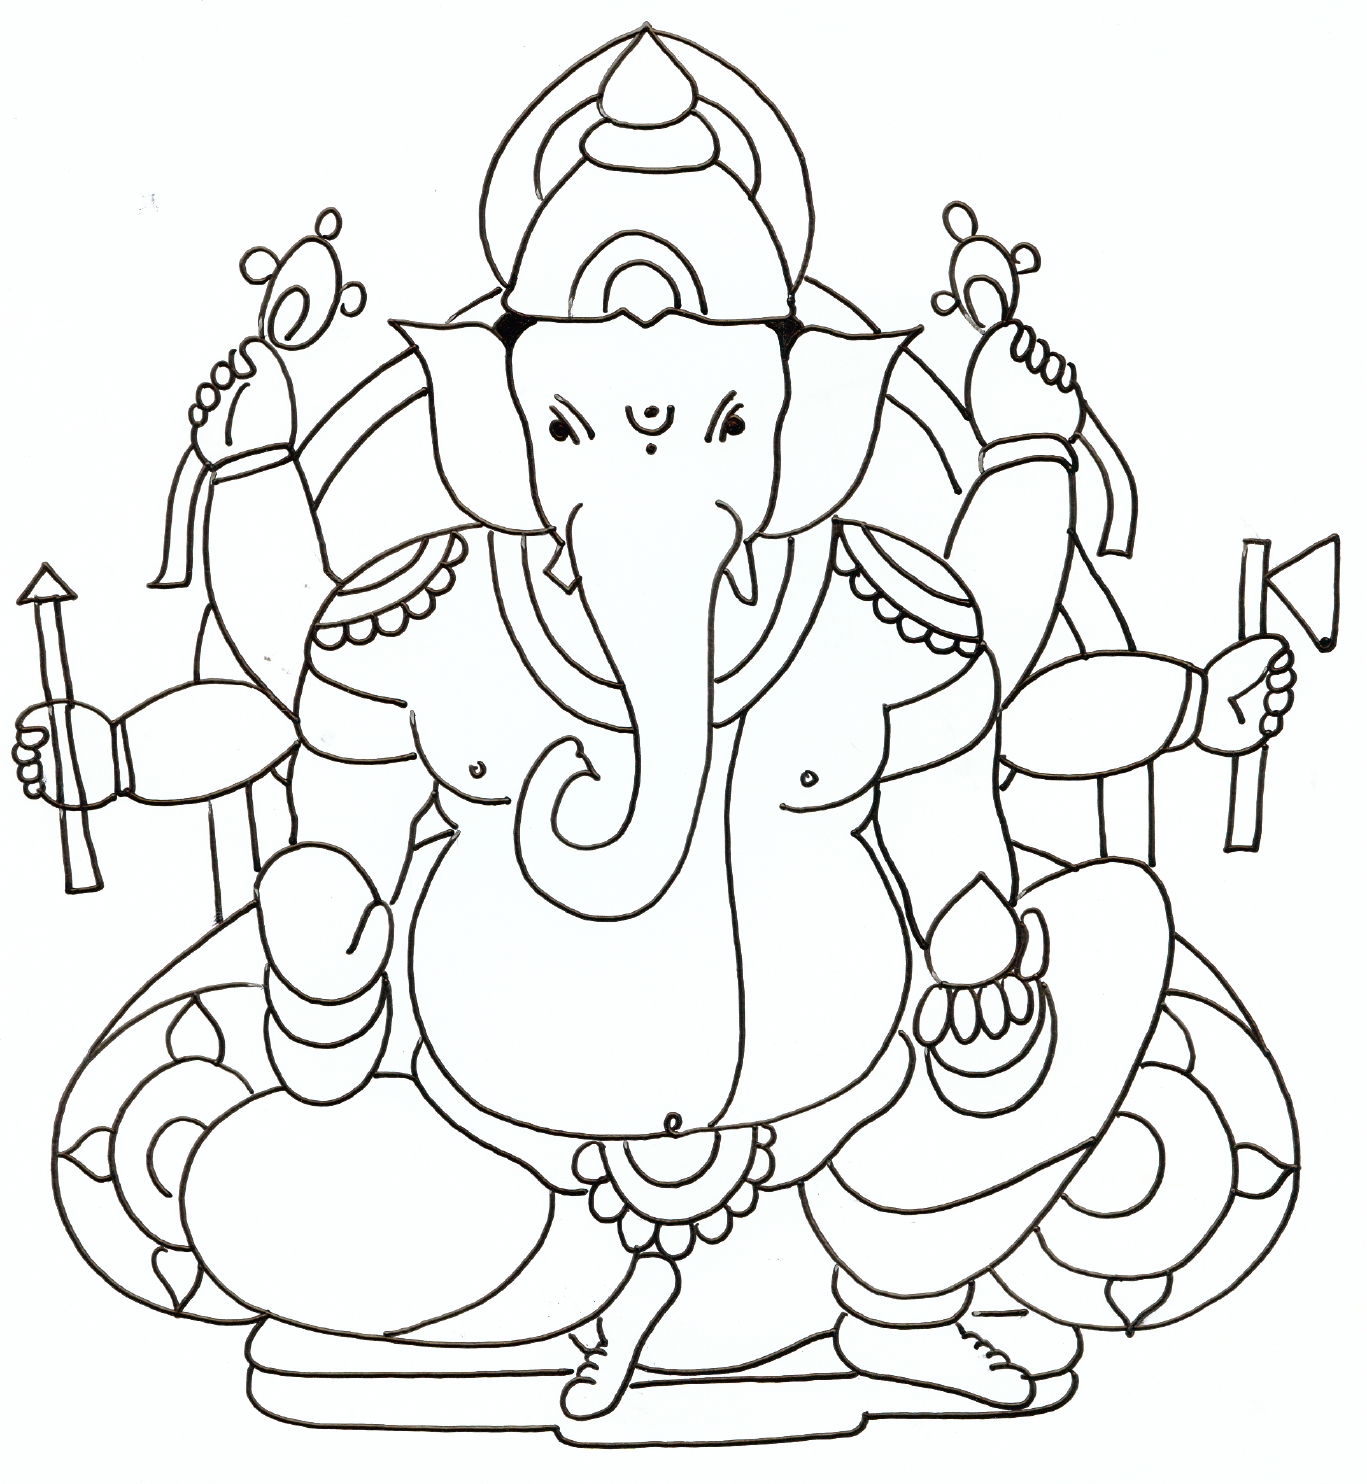 Mandala Art of lord Ganesh - RobinAge